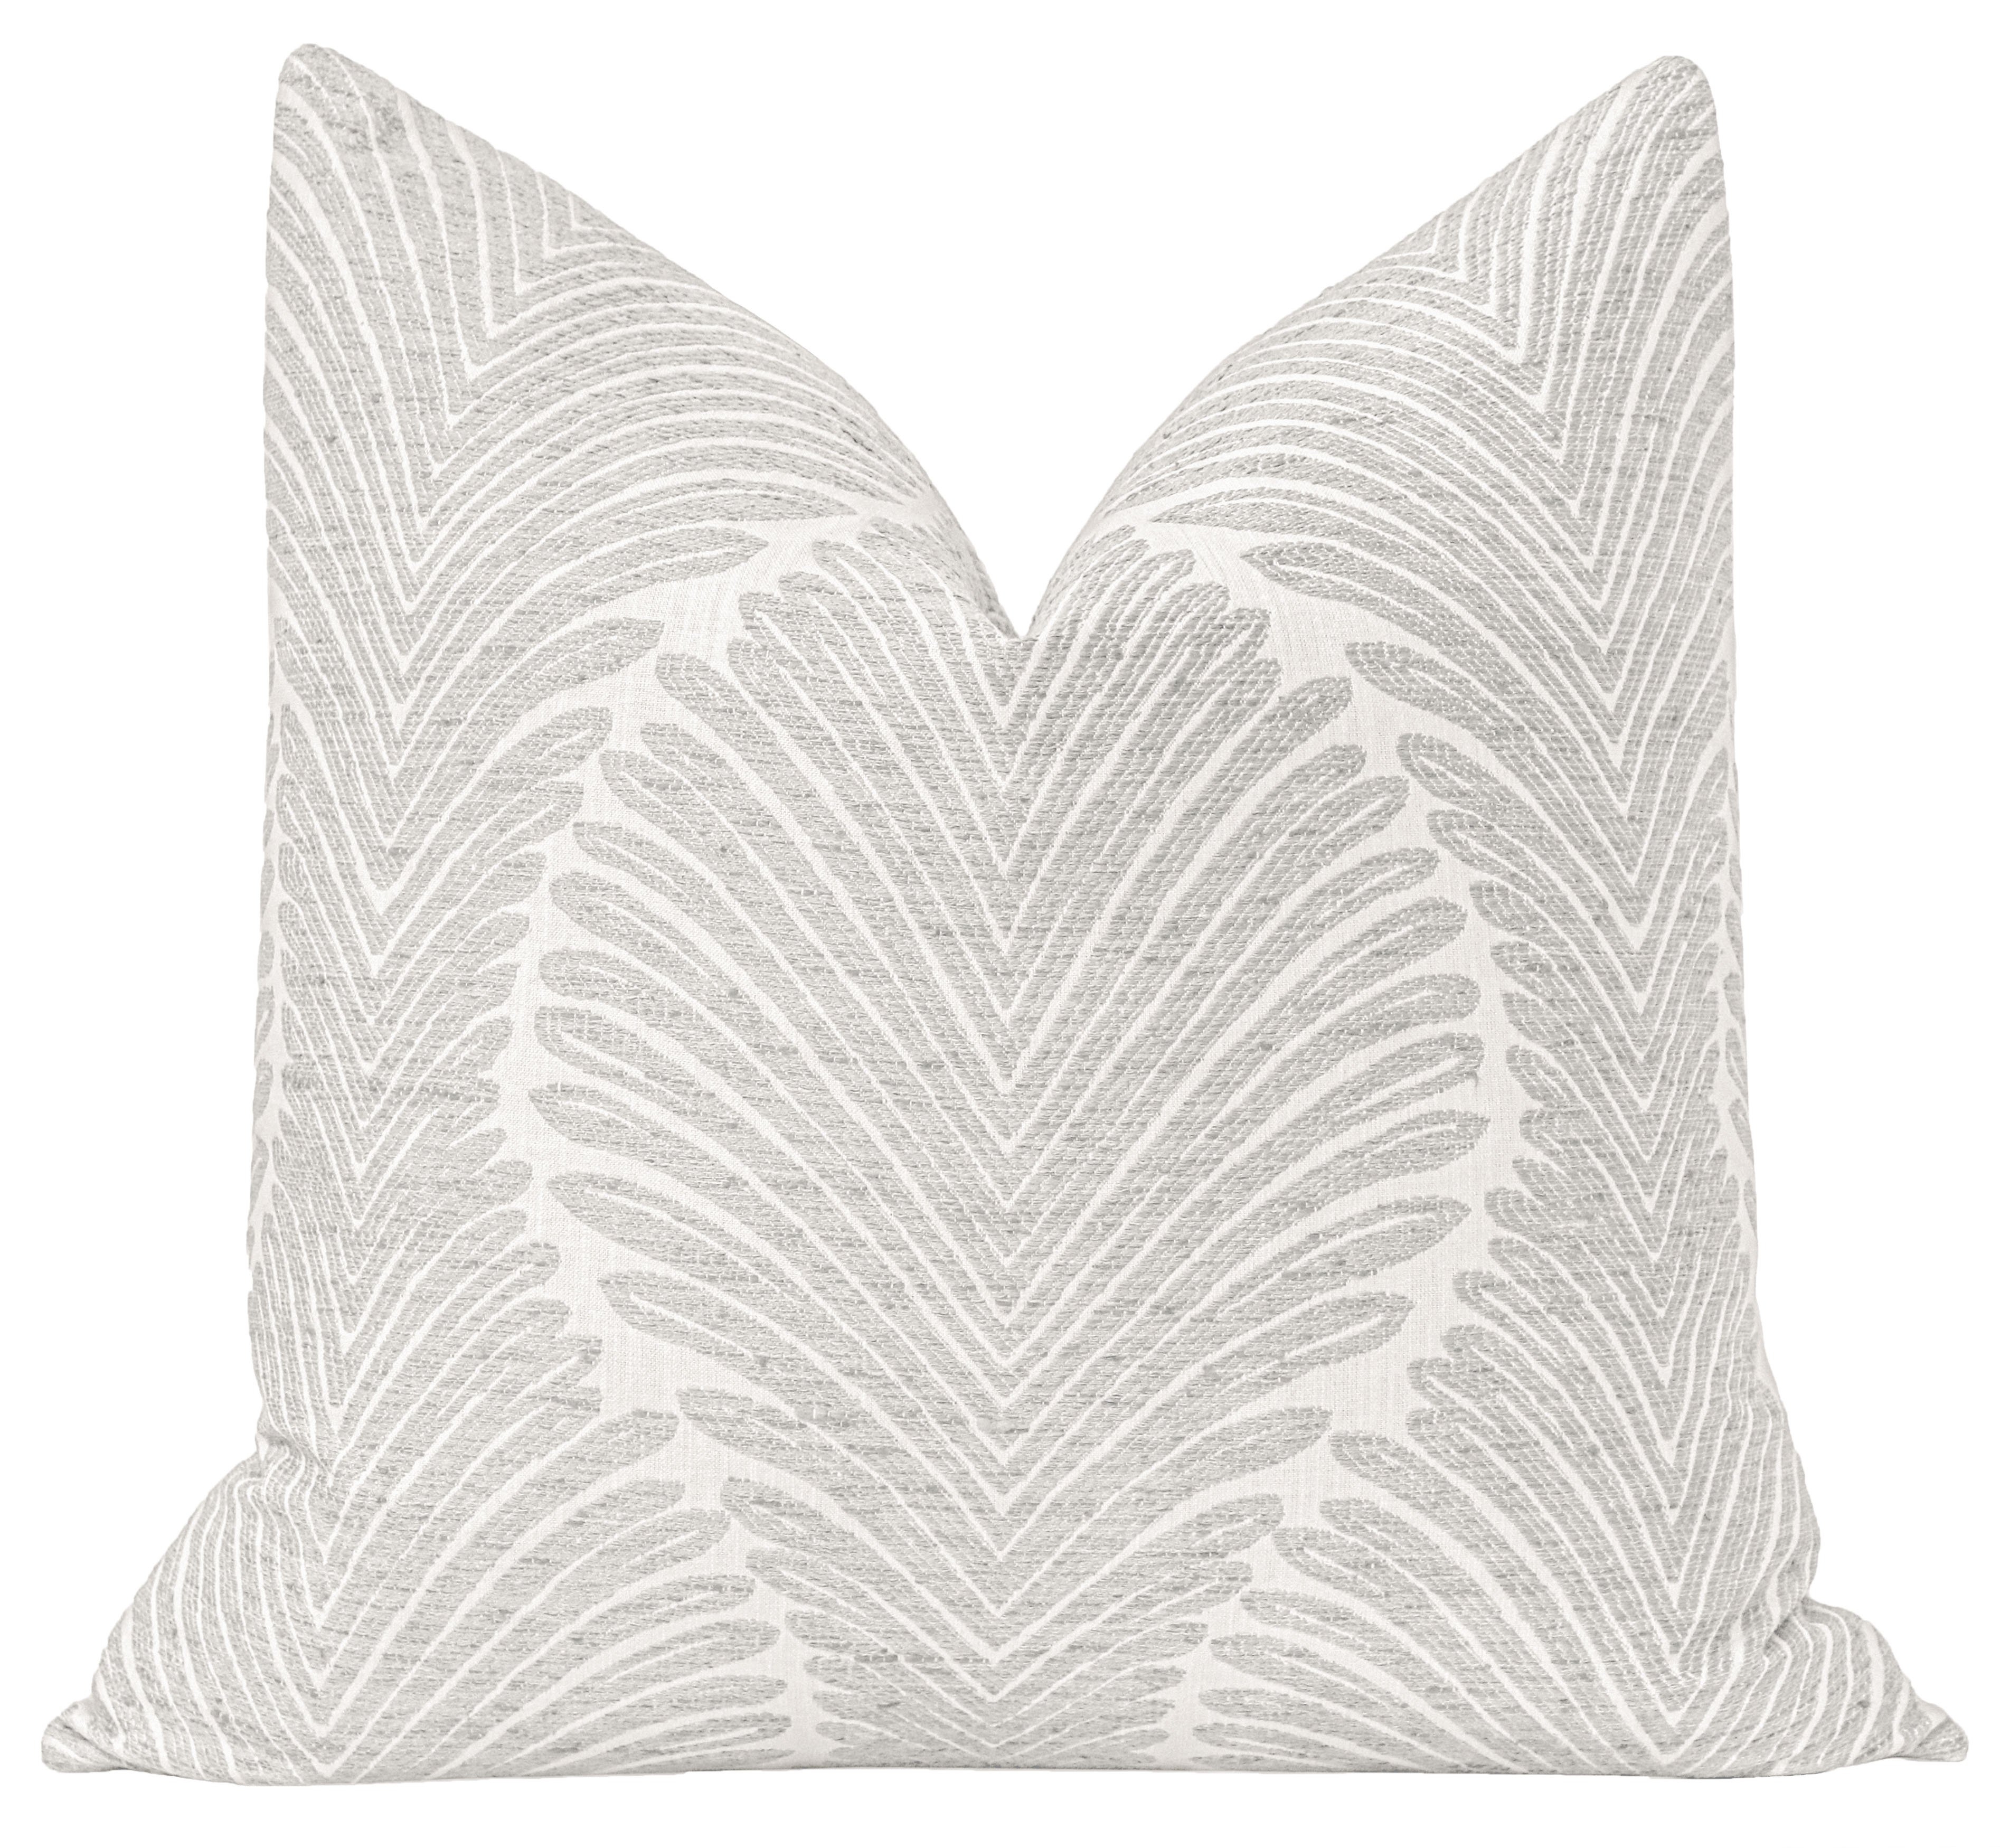 Musgrove Chenille Throw Pillow Cover, Dove Gray, 20" x 20" - Image 0